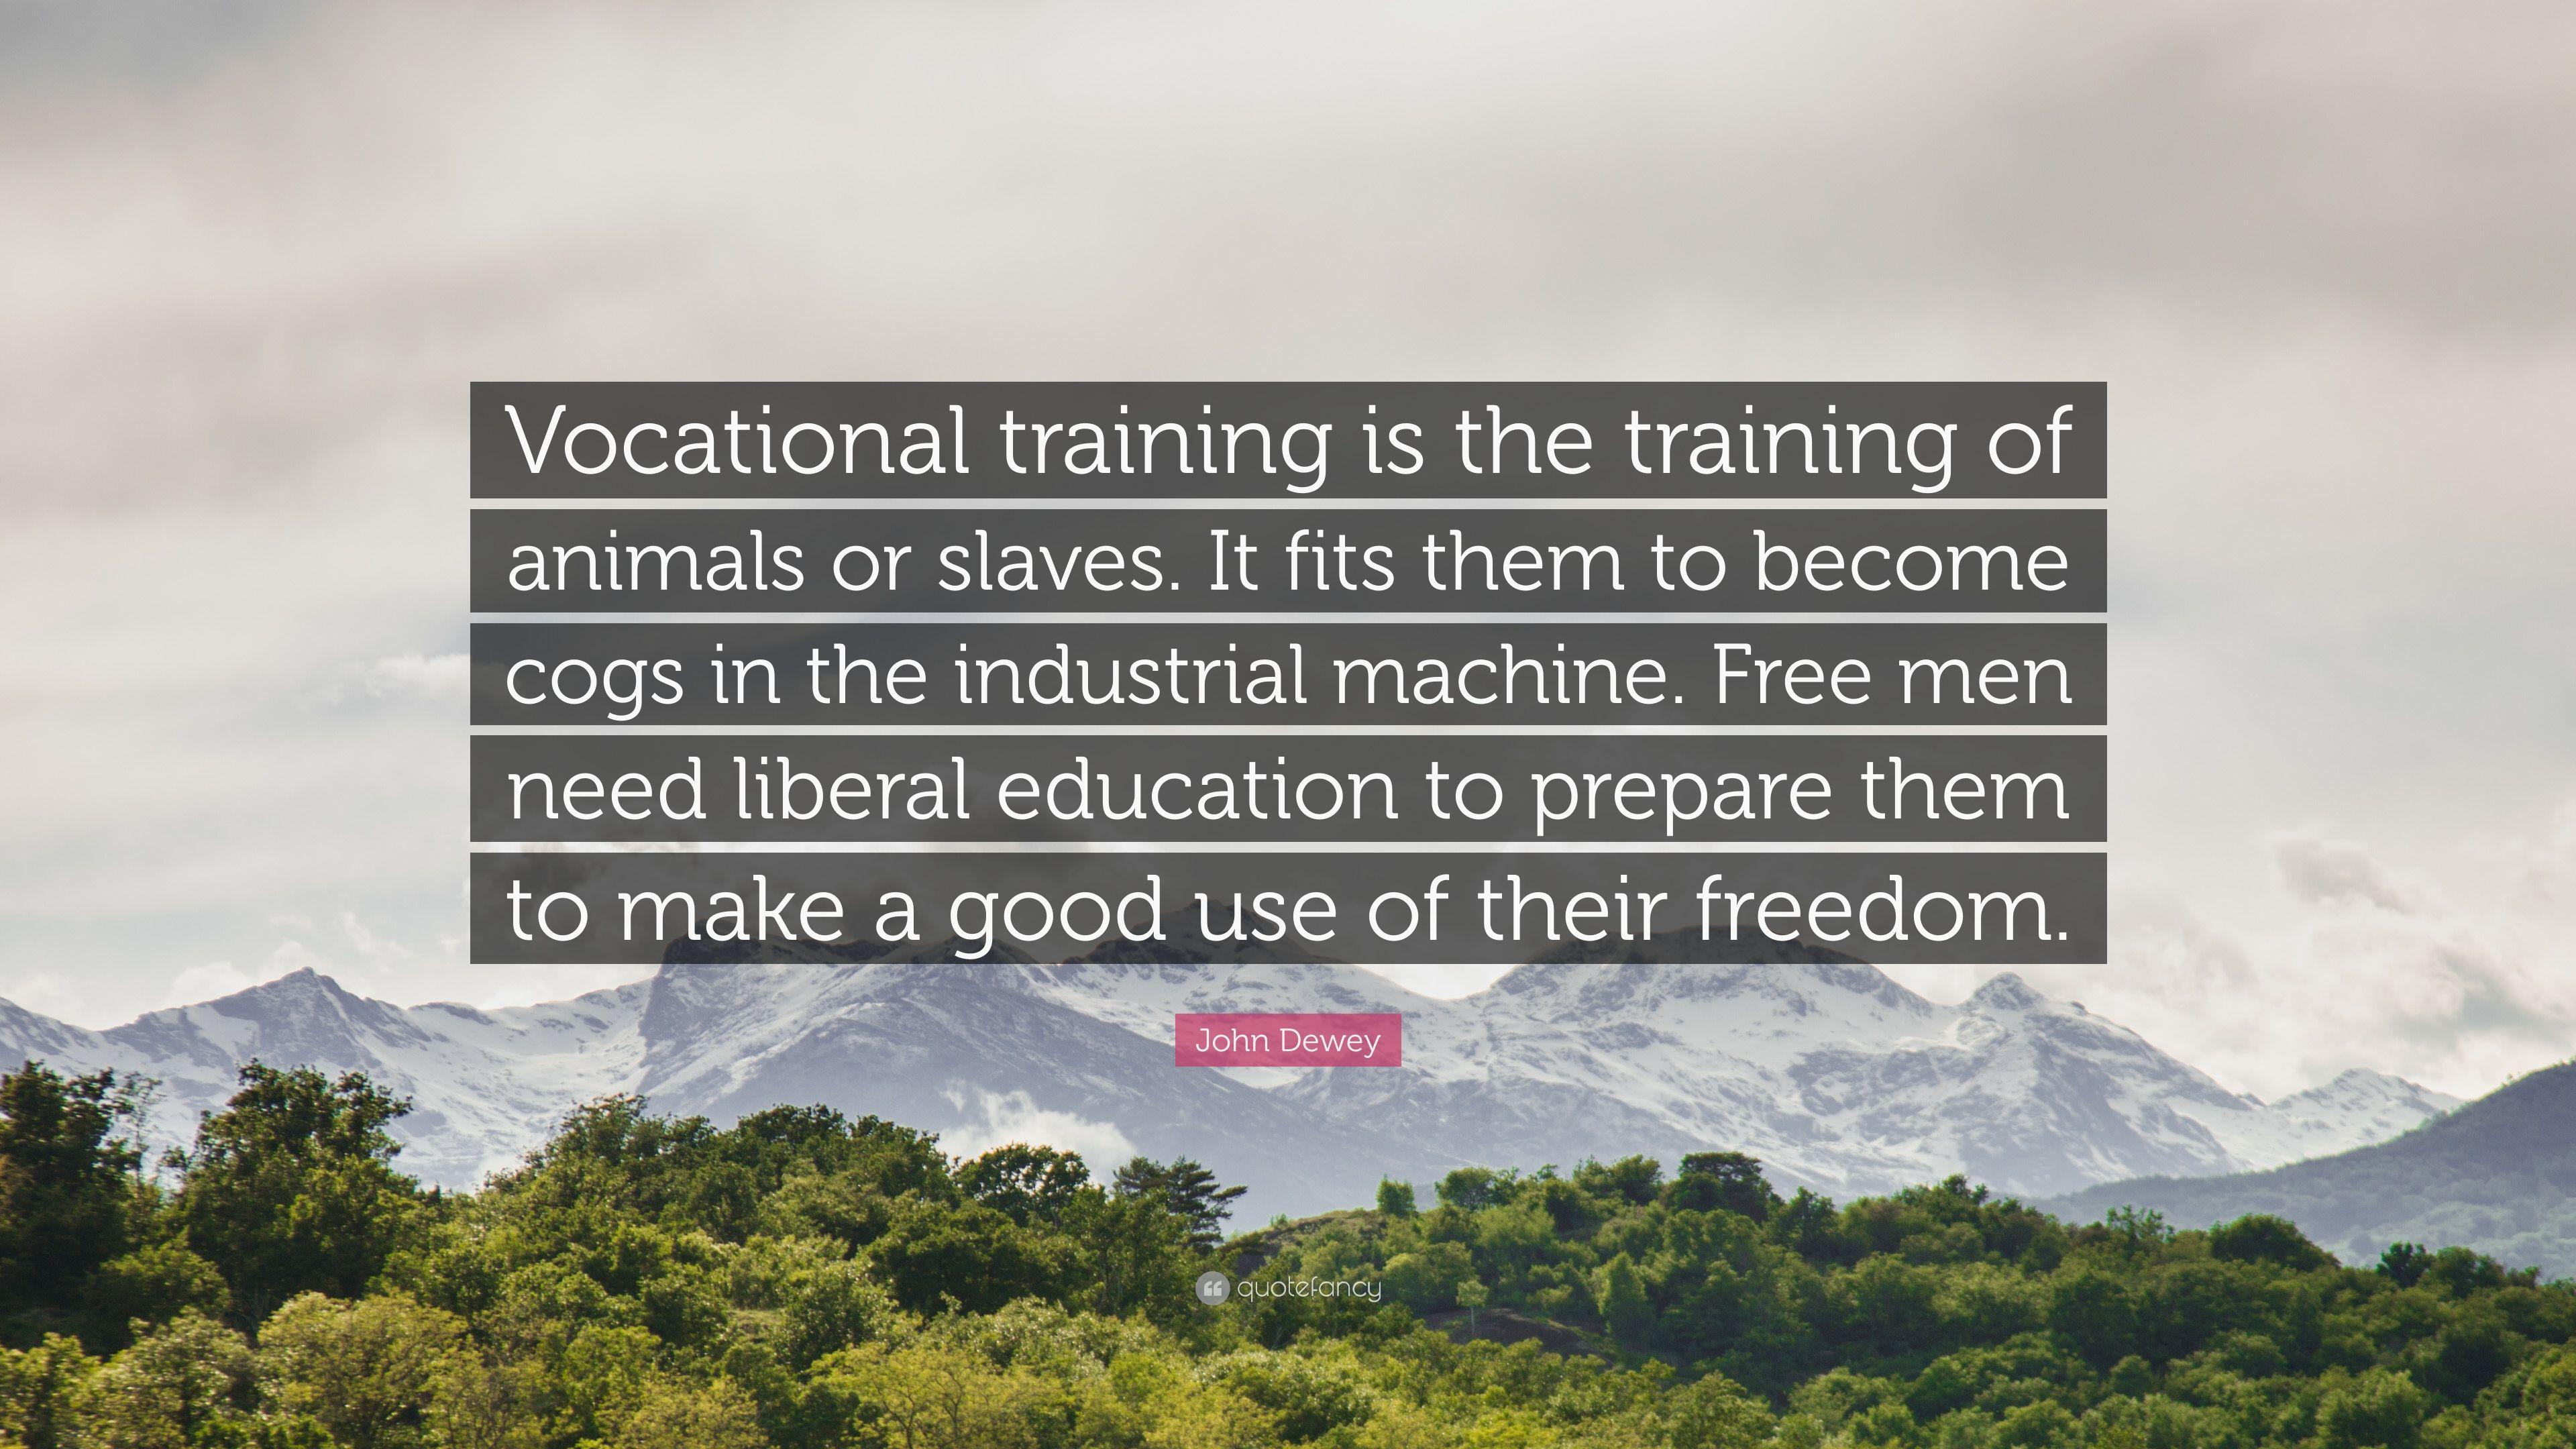 John Dewey Quote: “Vocational training is the training of animals